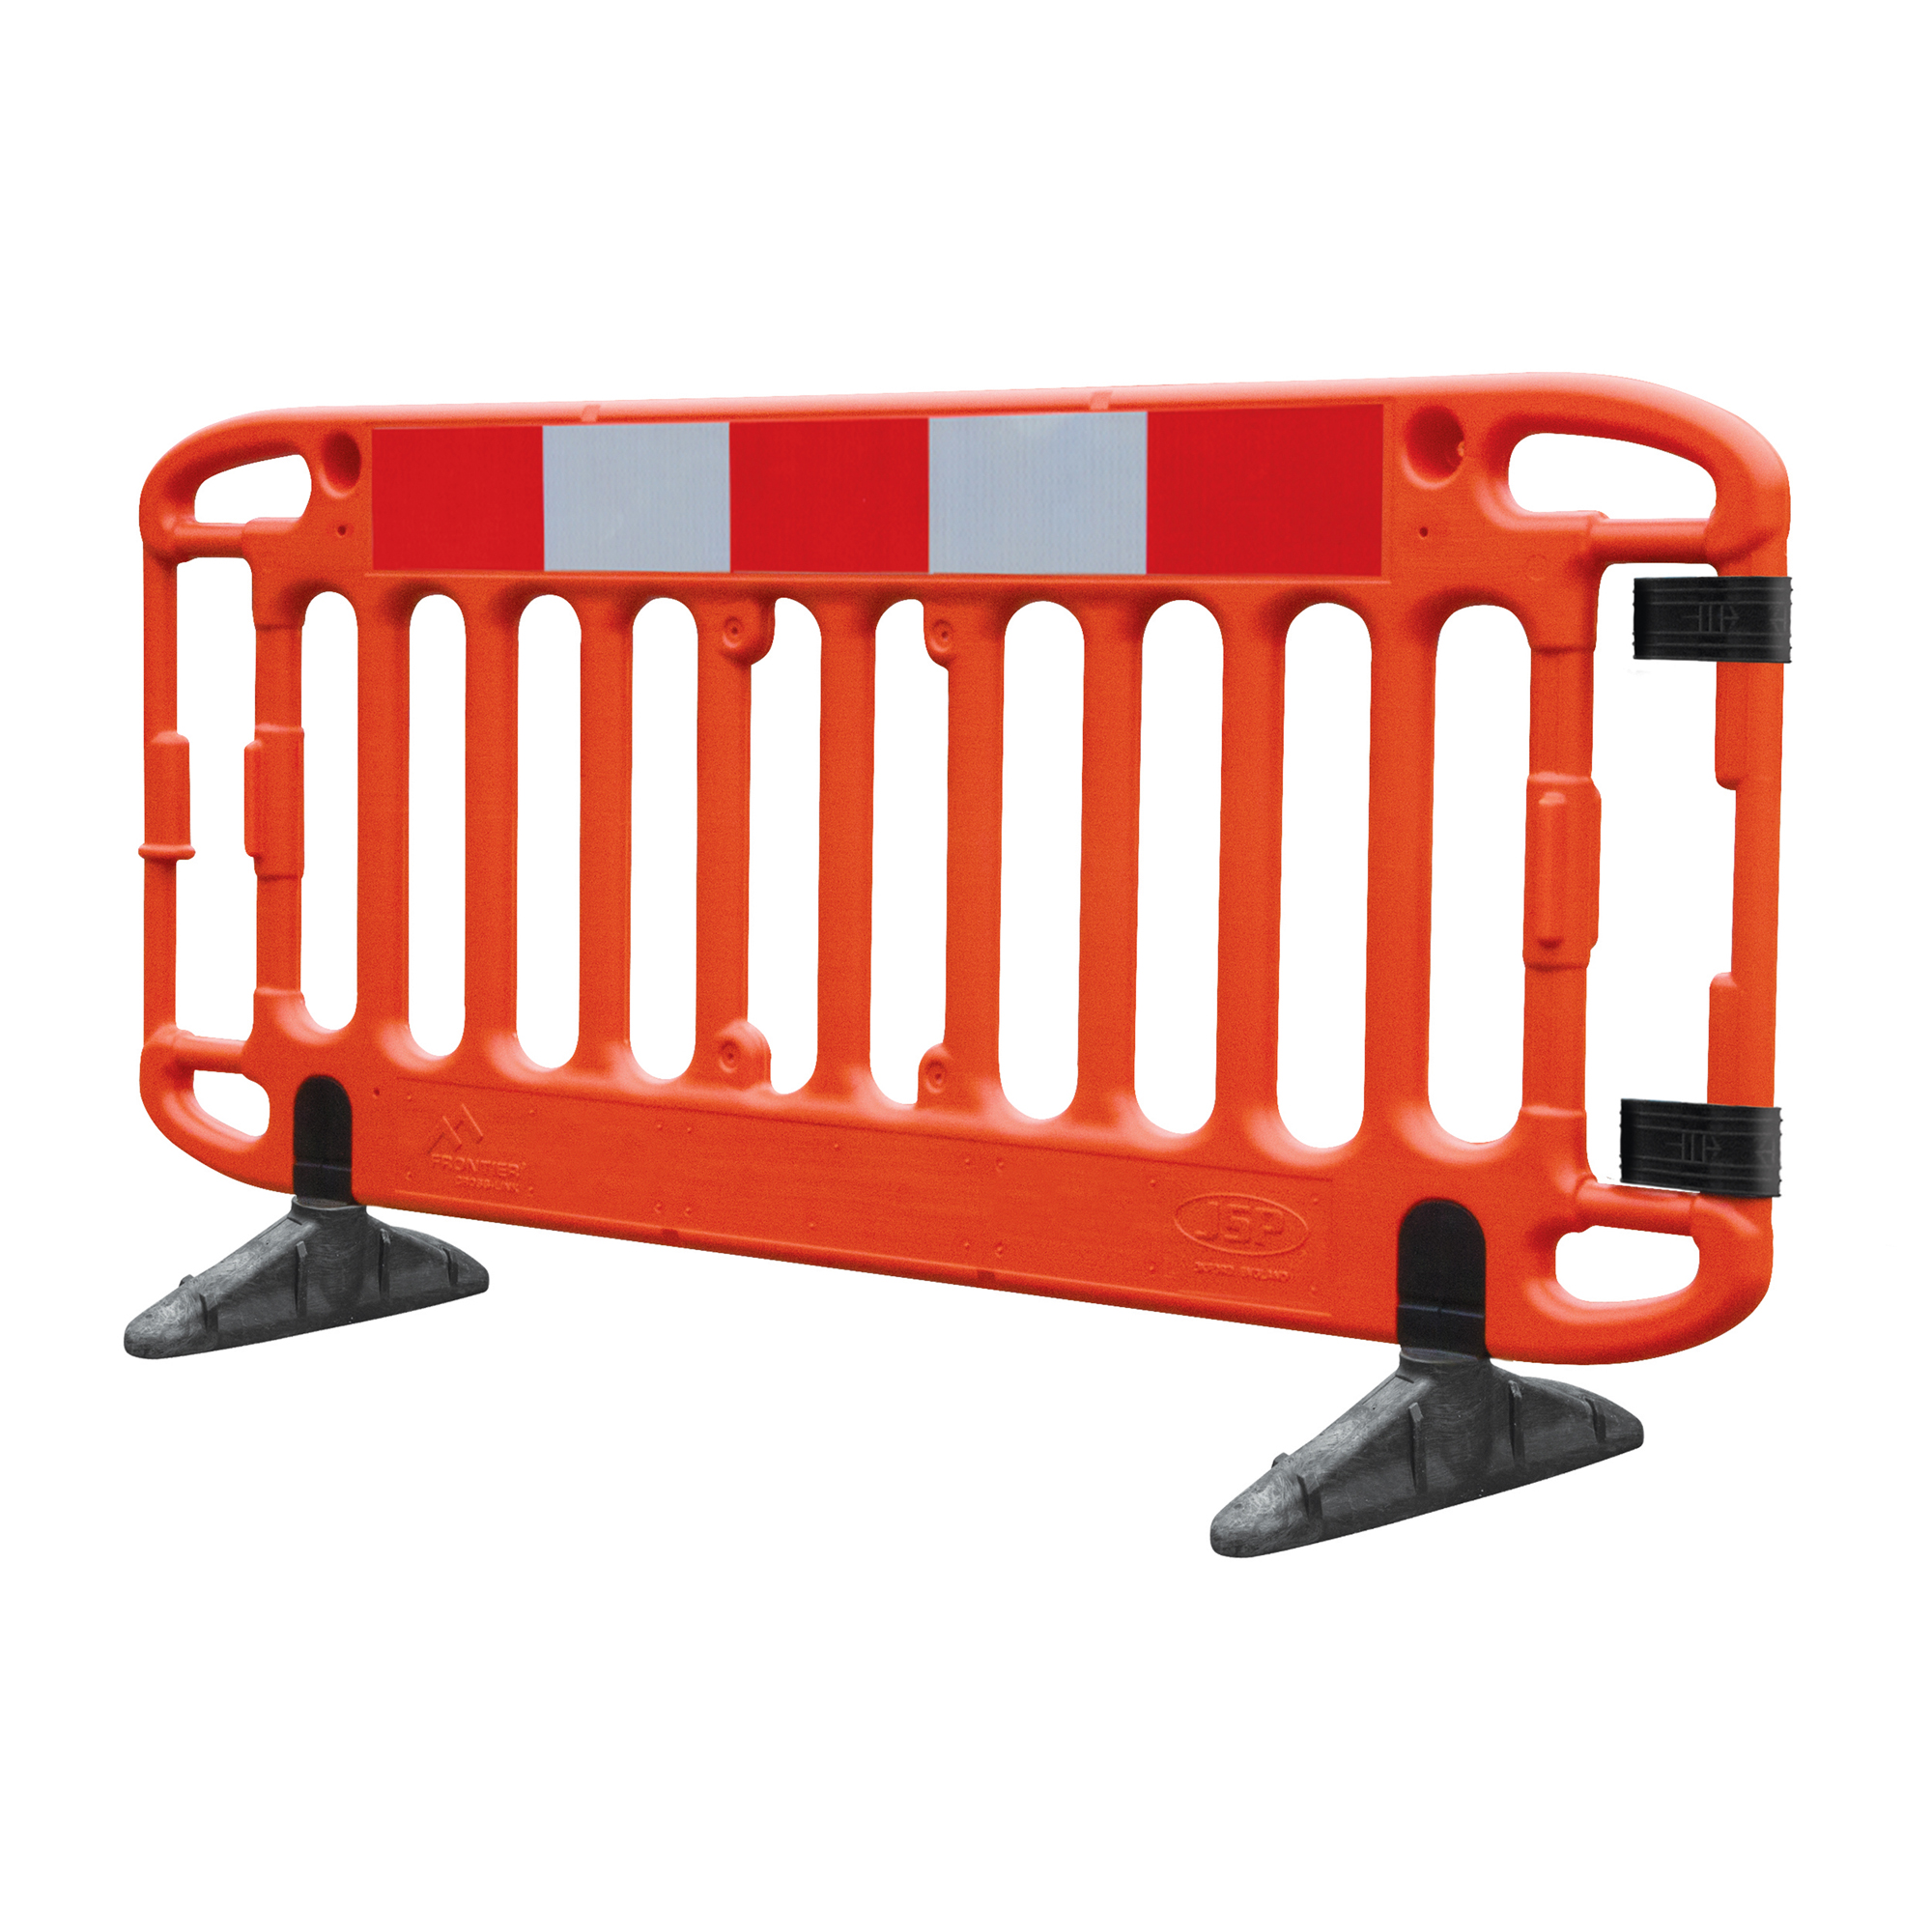 2 Meter Road Barrier Traffic Management Barriers Orange Brand New 